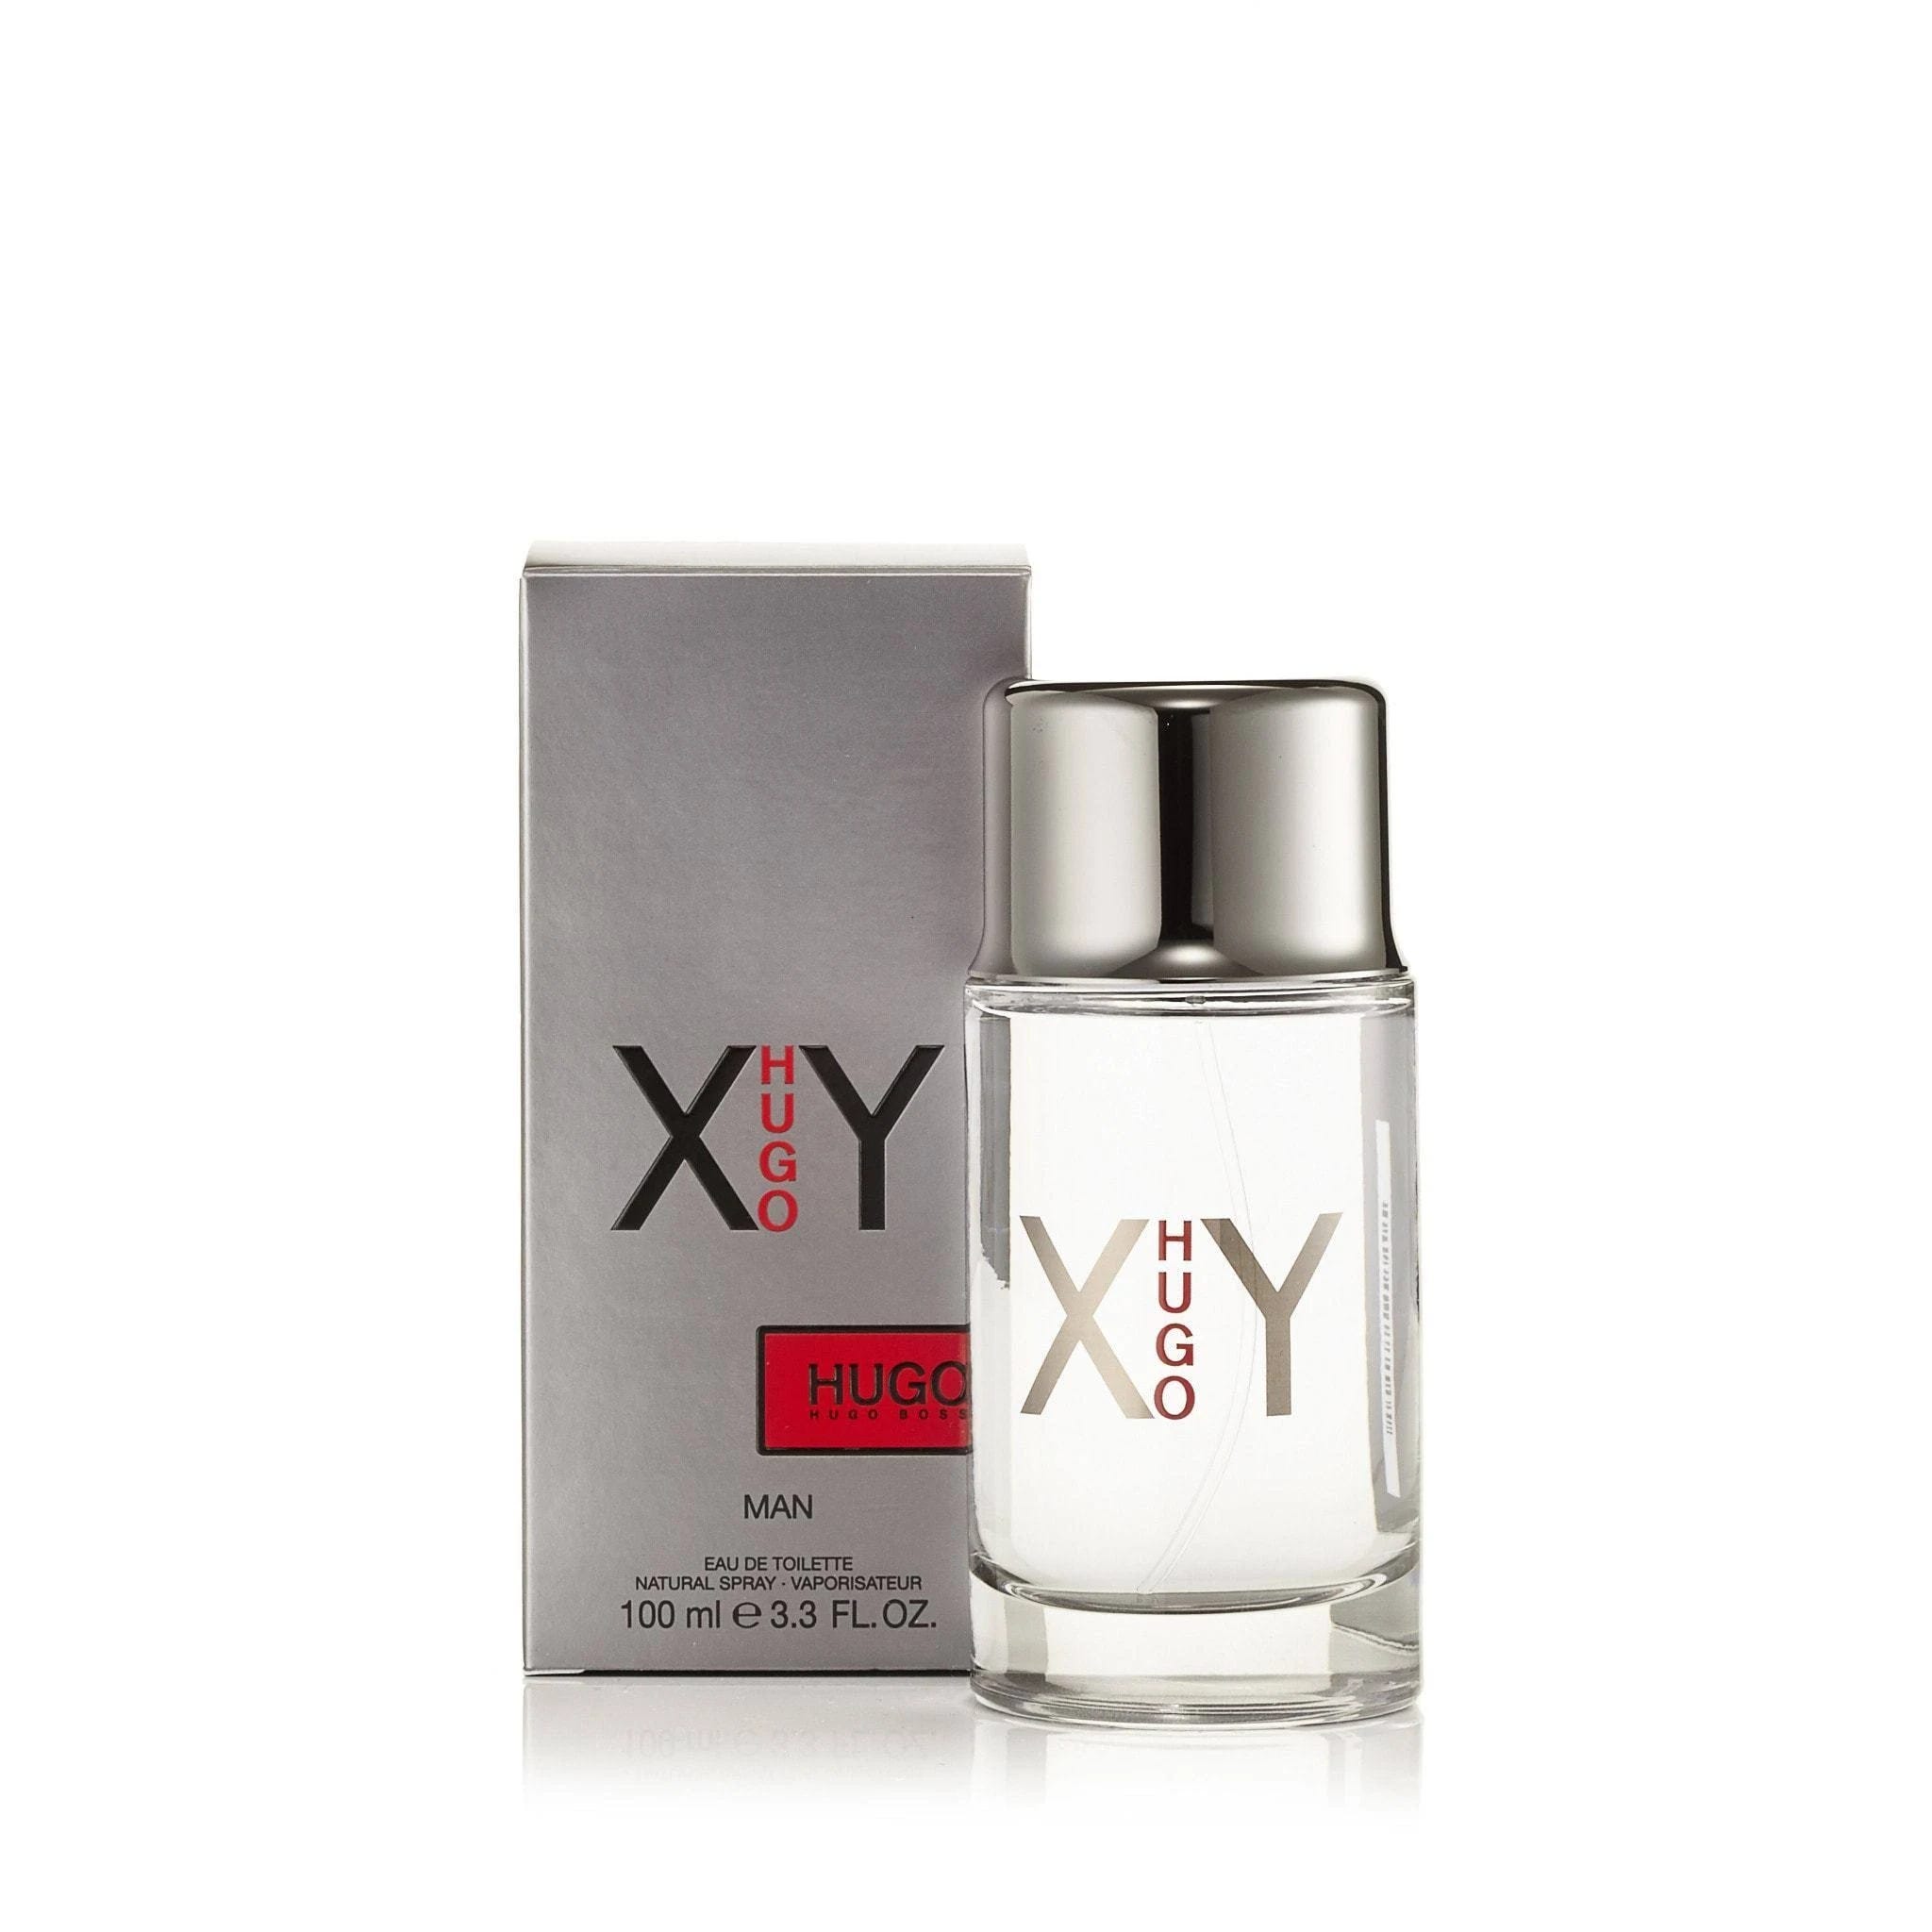 Hugo Boss XY Eau De Toilette Spray - Fresh, Woody Aroma with Mint and Bergamot Notes | Image